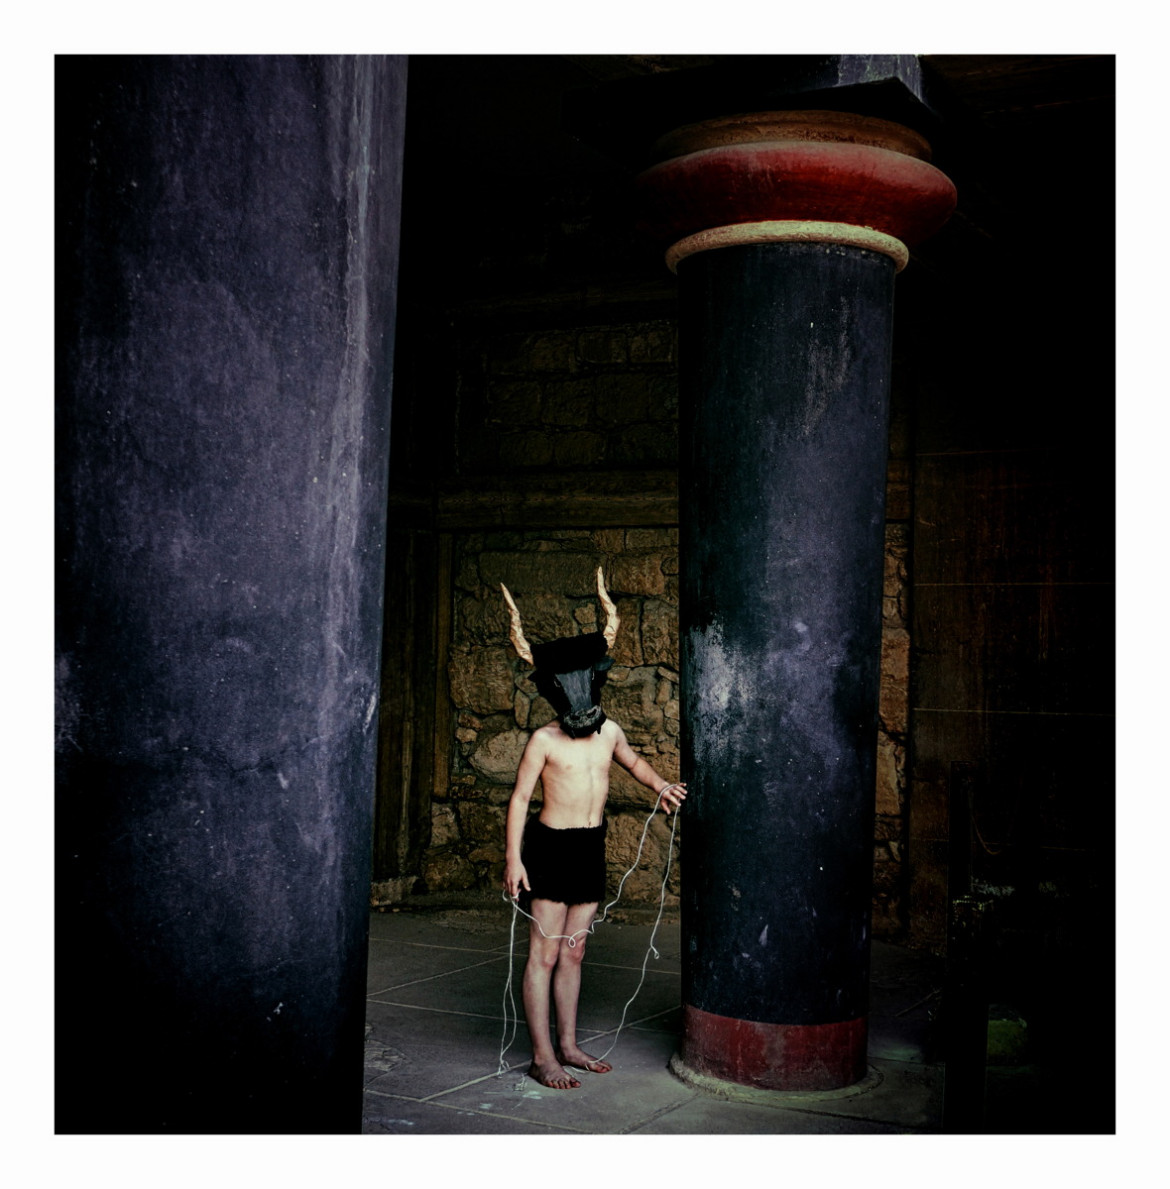 fot. Panoss Kordas, "Young Minotaur" Grecja.

1. miejsce w kategorii Kultura